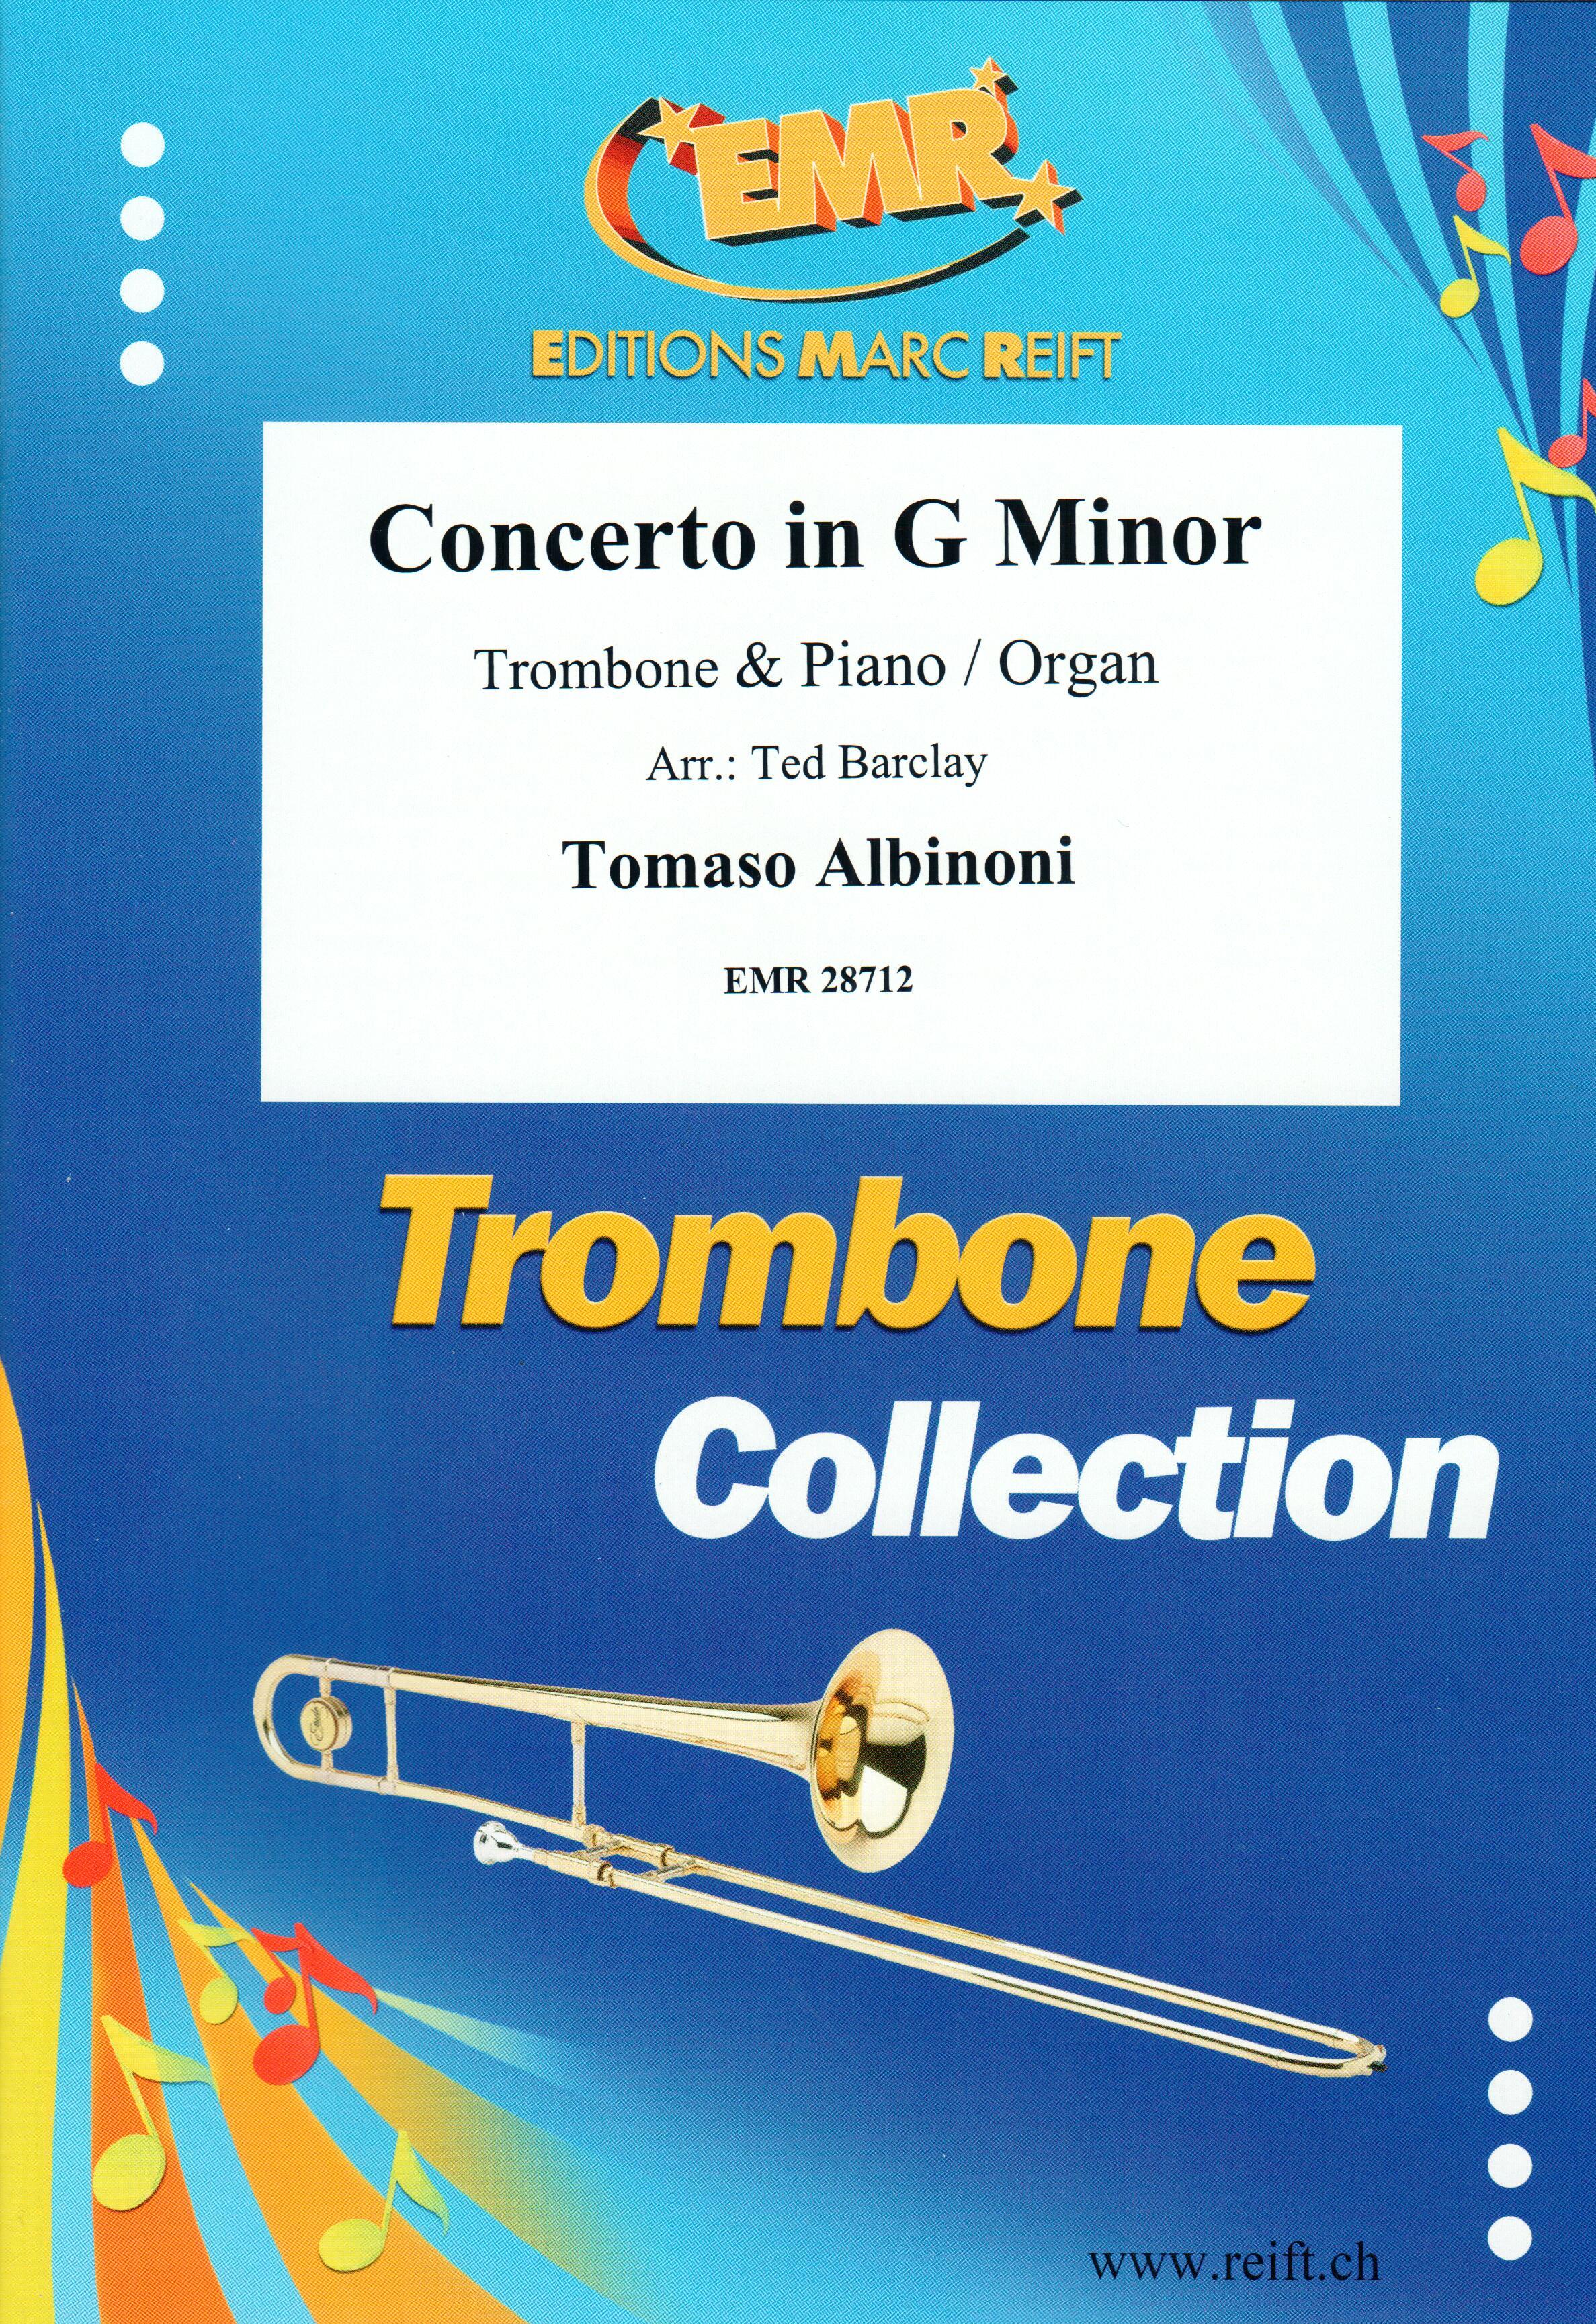 CONCERTO IN G MINOR, SOLOS - Trombone